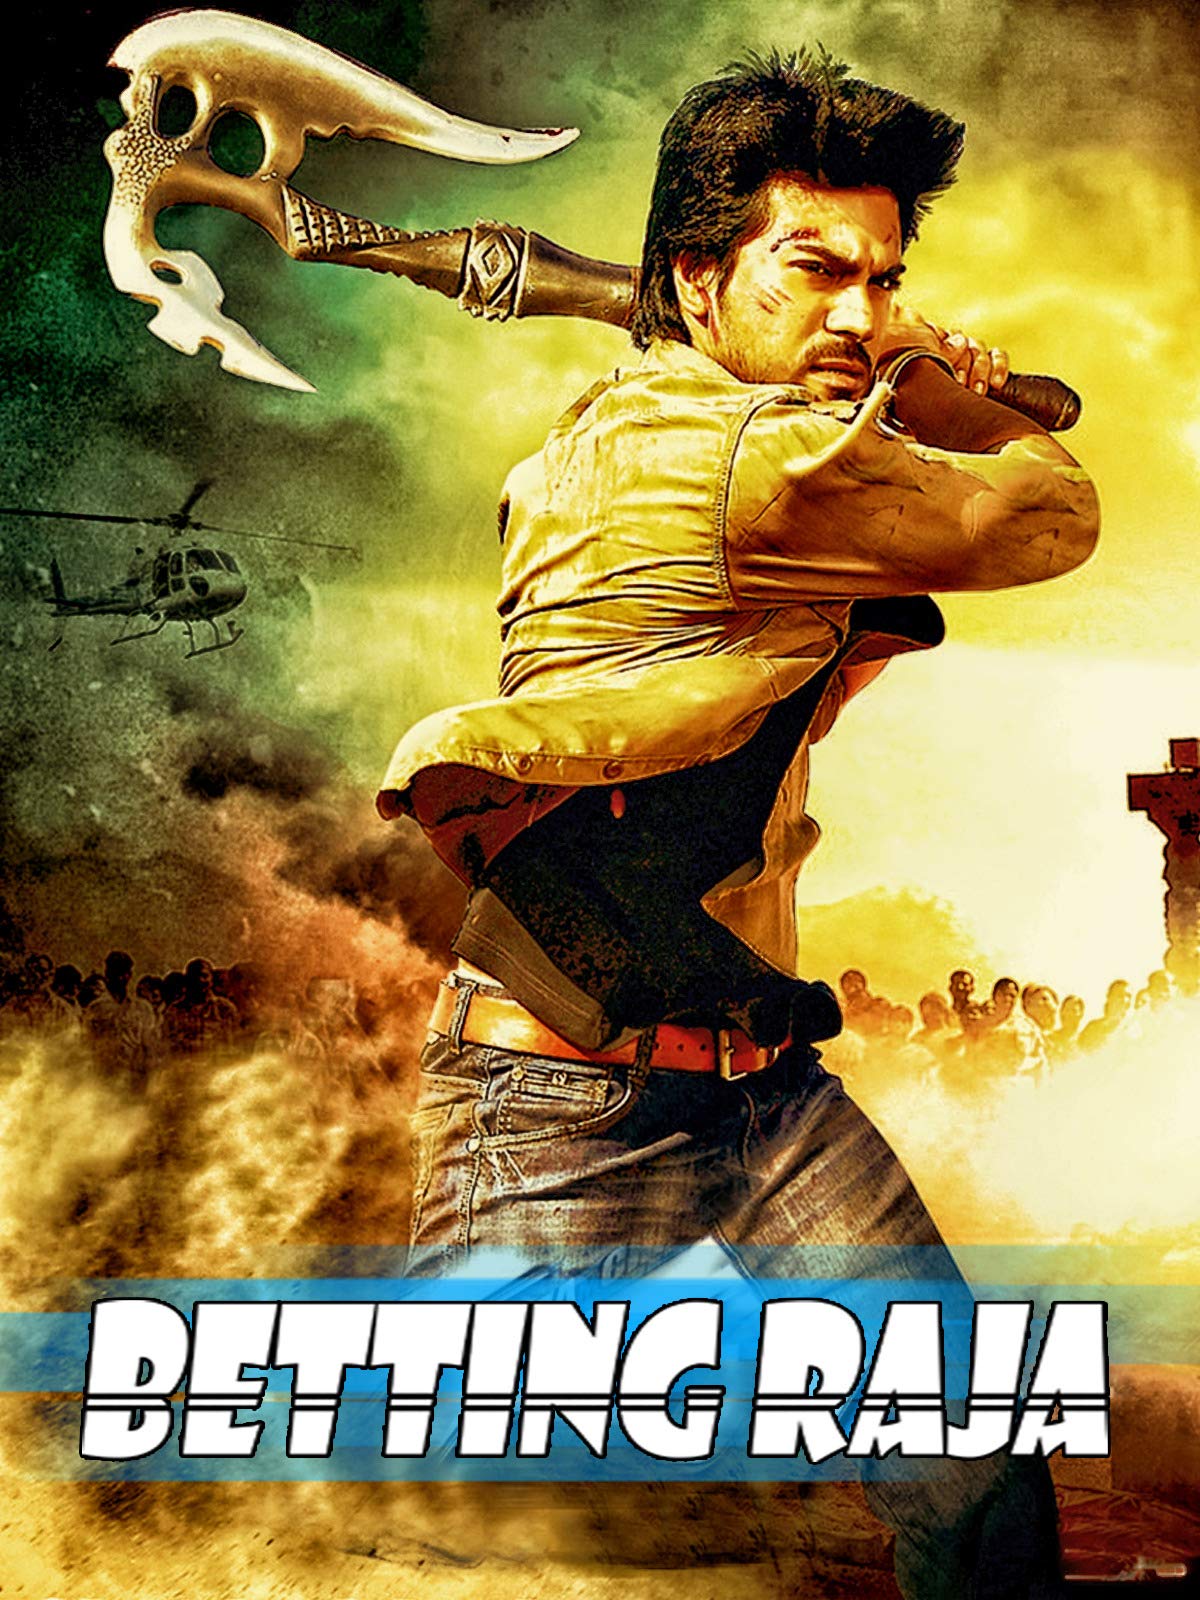 Racha (Betting Raja) 2012 Hindi ORG Dual Audio 1080p 720p 480p BluRay ESub Download